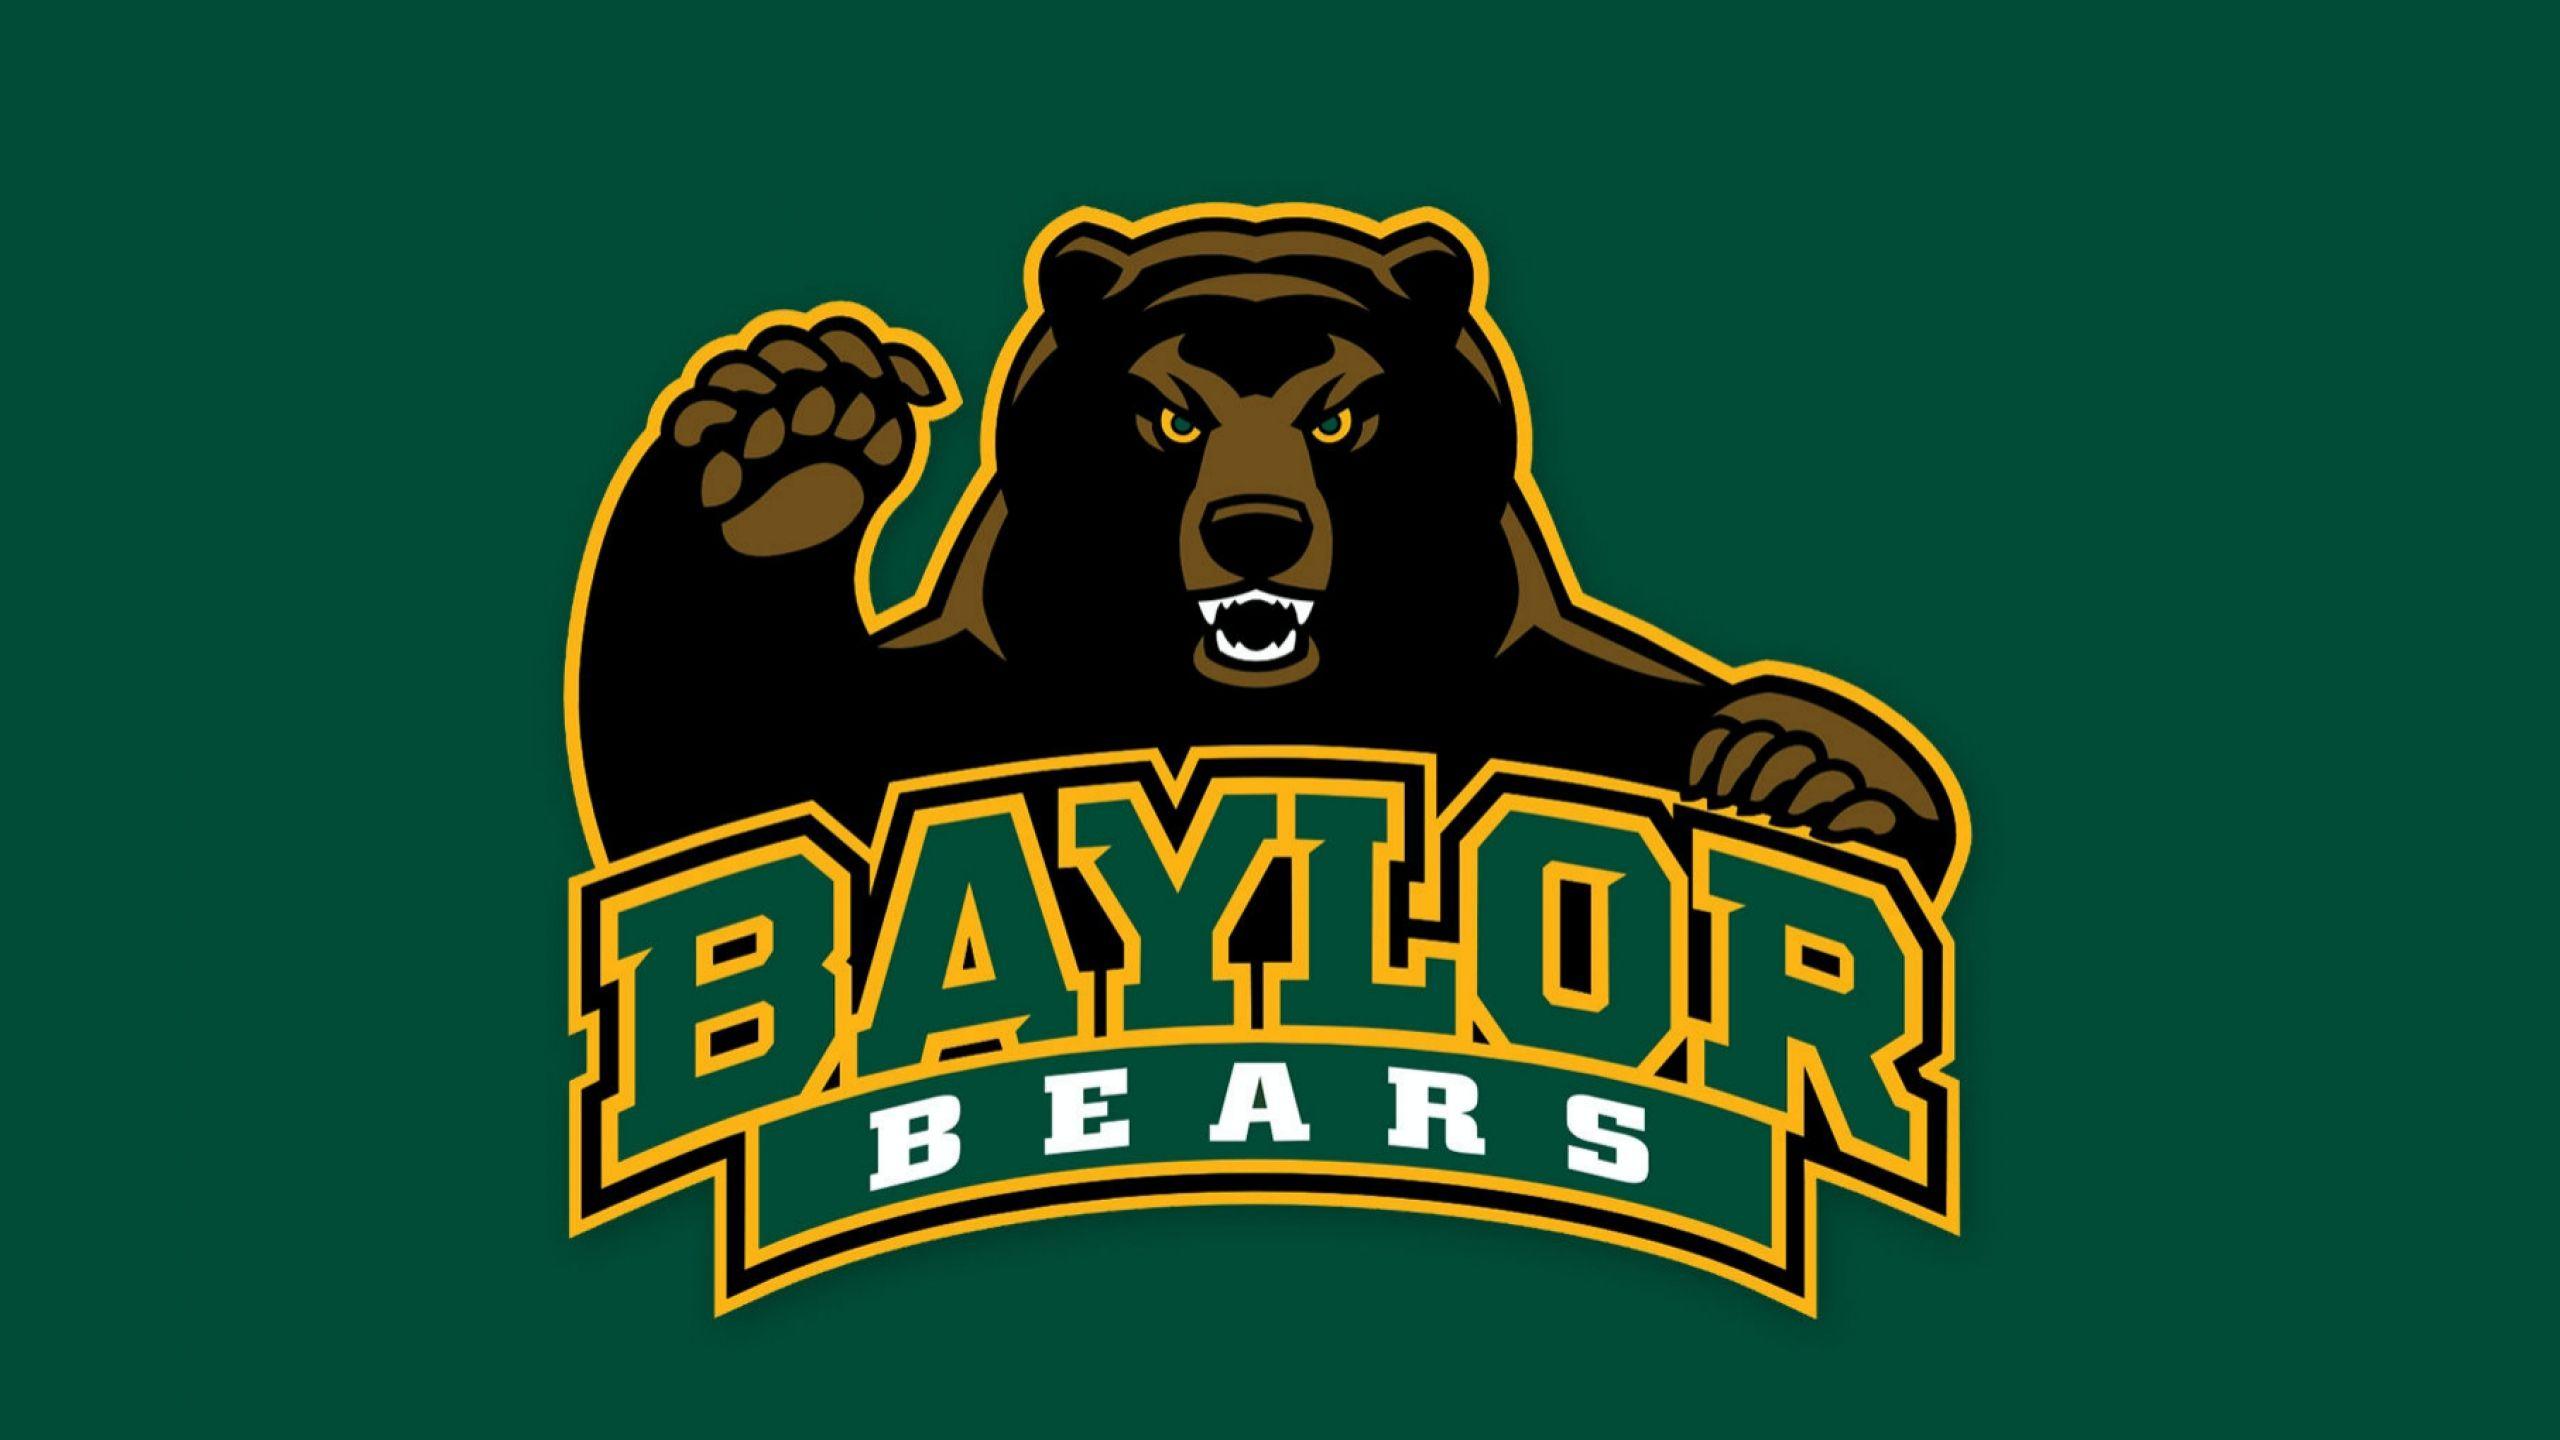 Download Wallpaper 2560x1440 Baylor university, Baylor bears, Logo